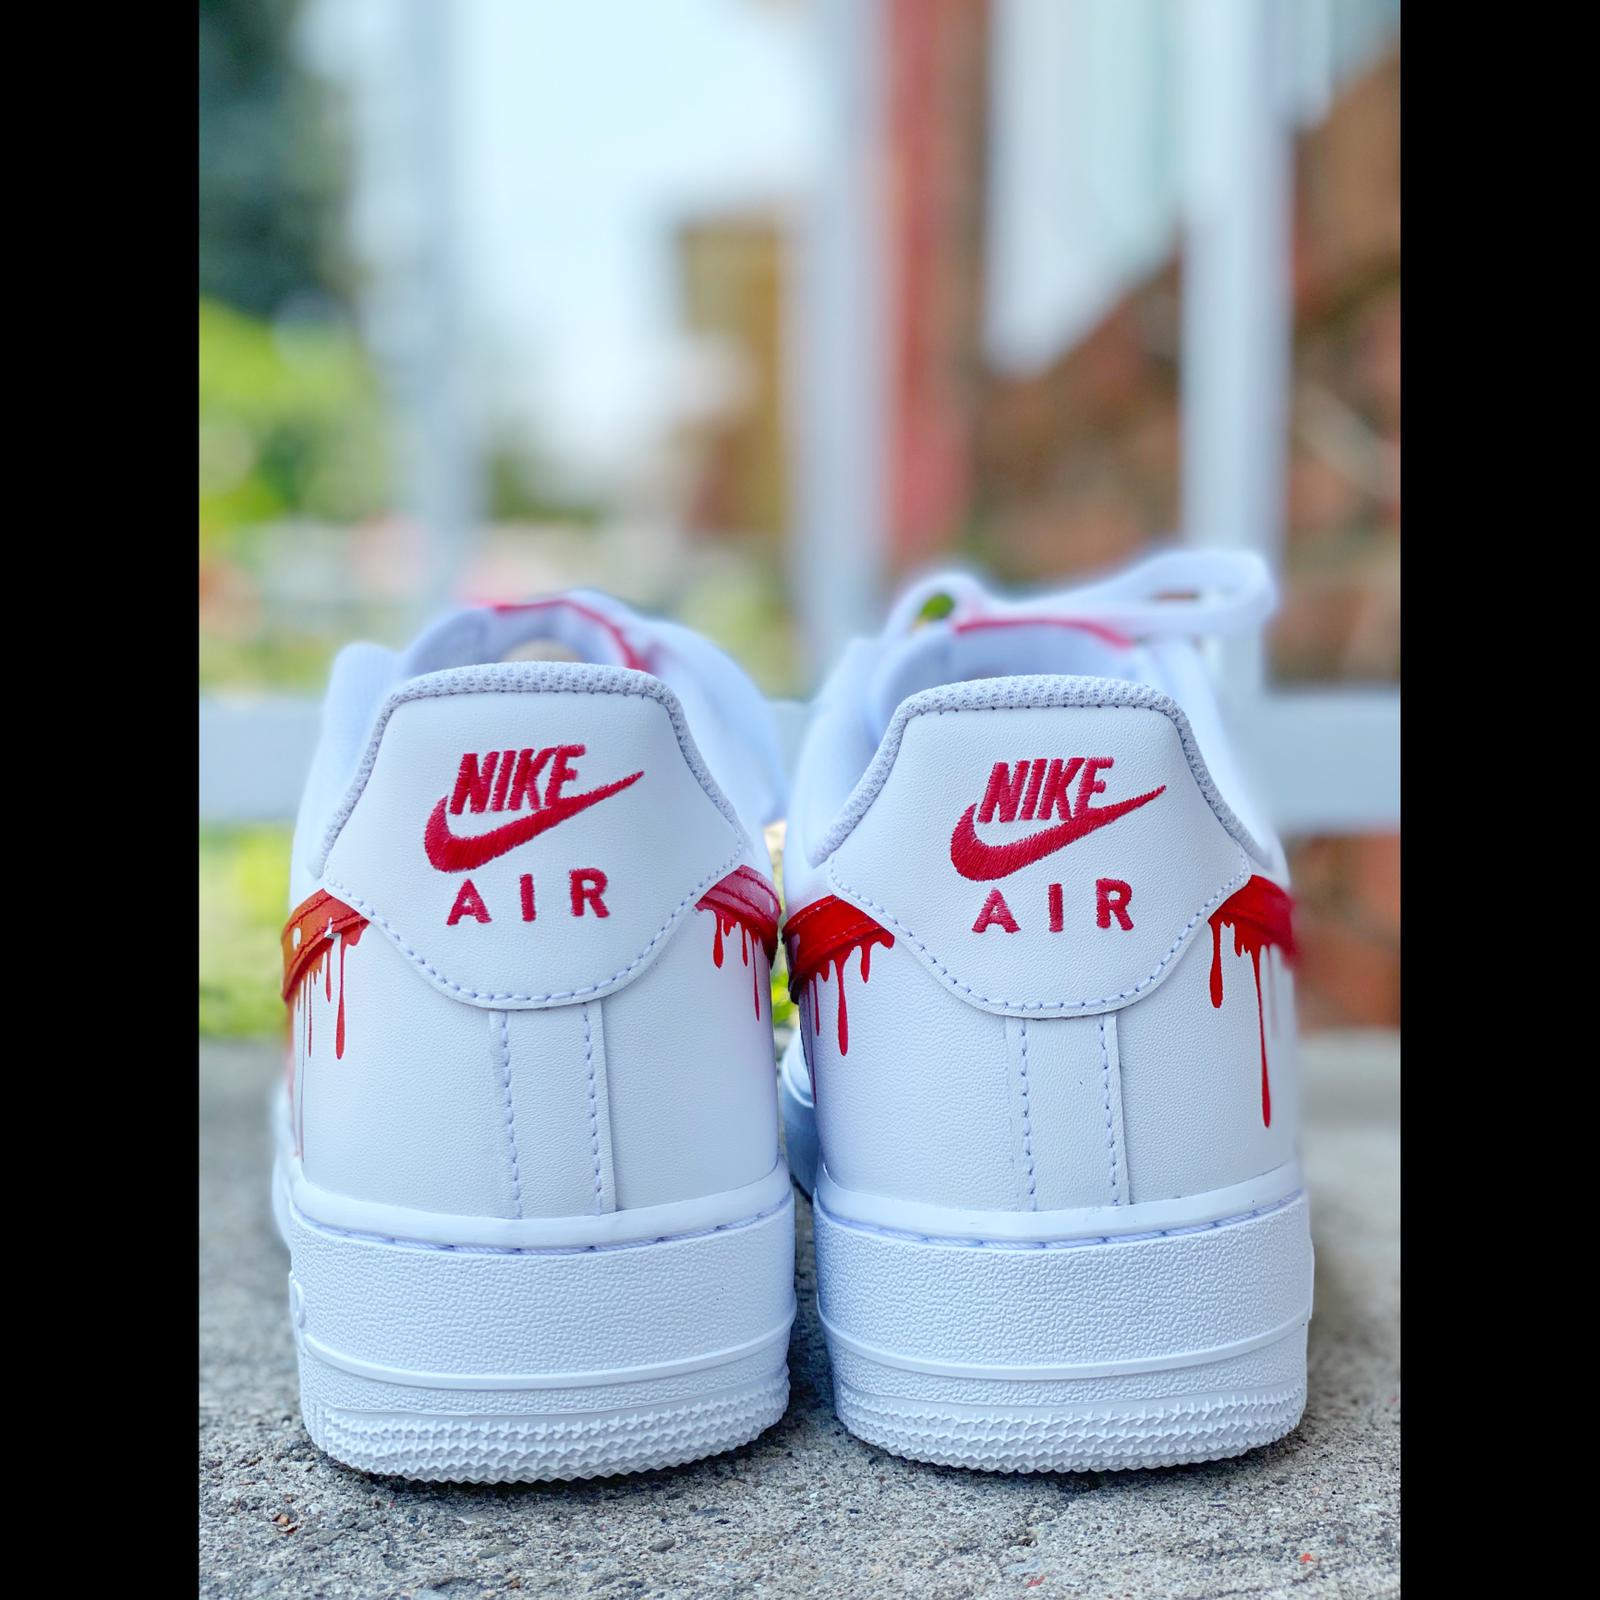 Custom Red Nike Drip Air Force Ones